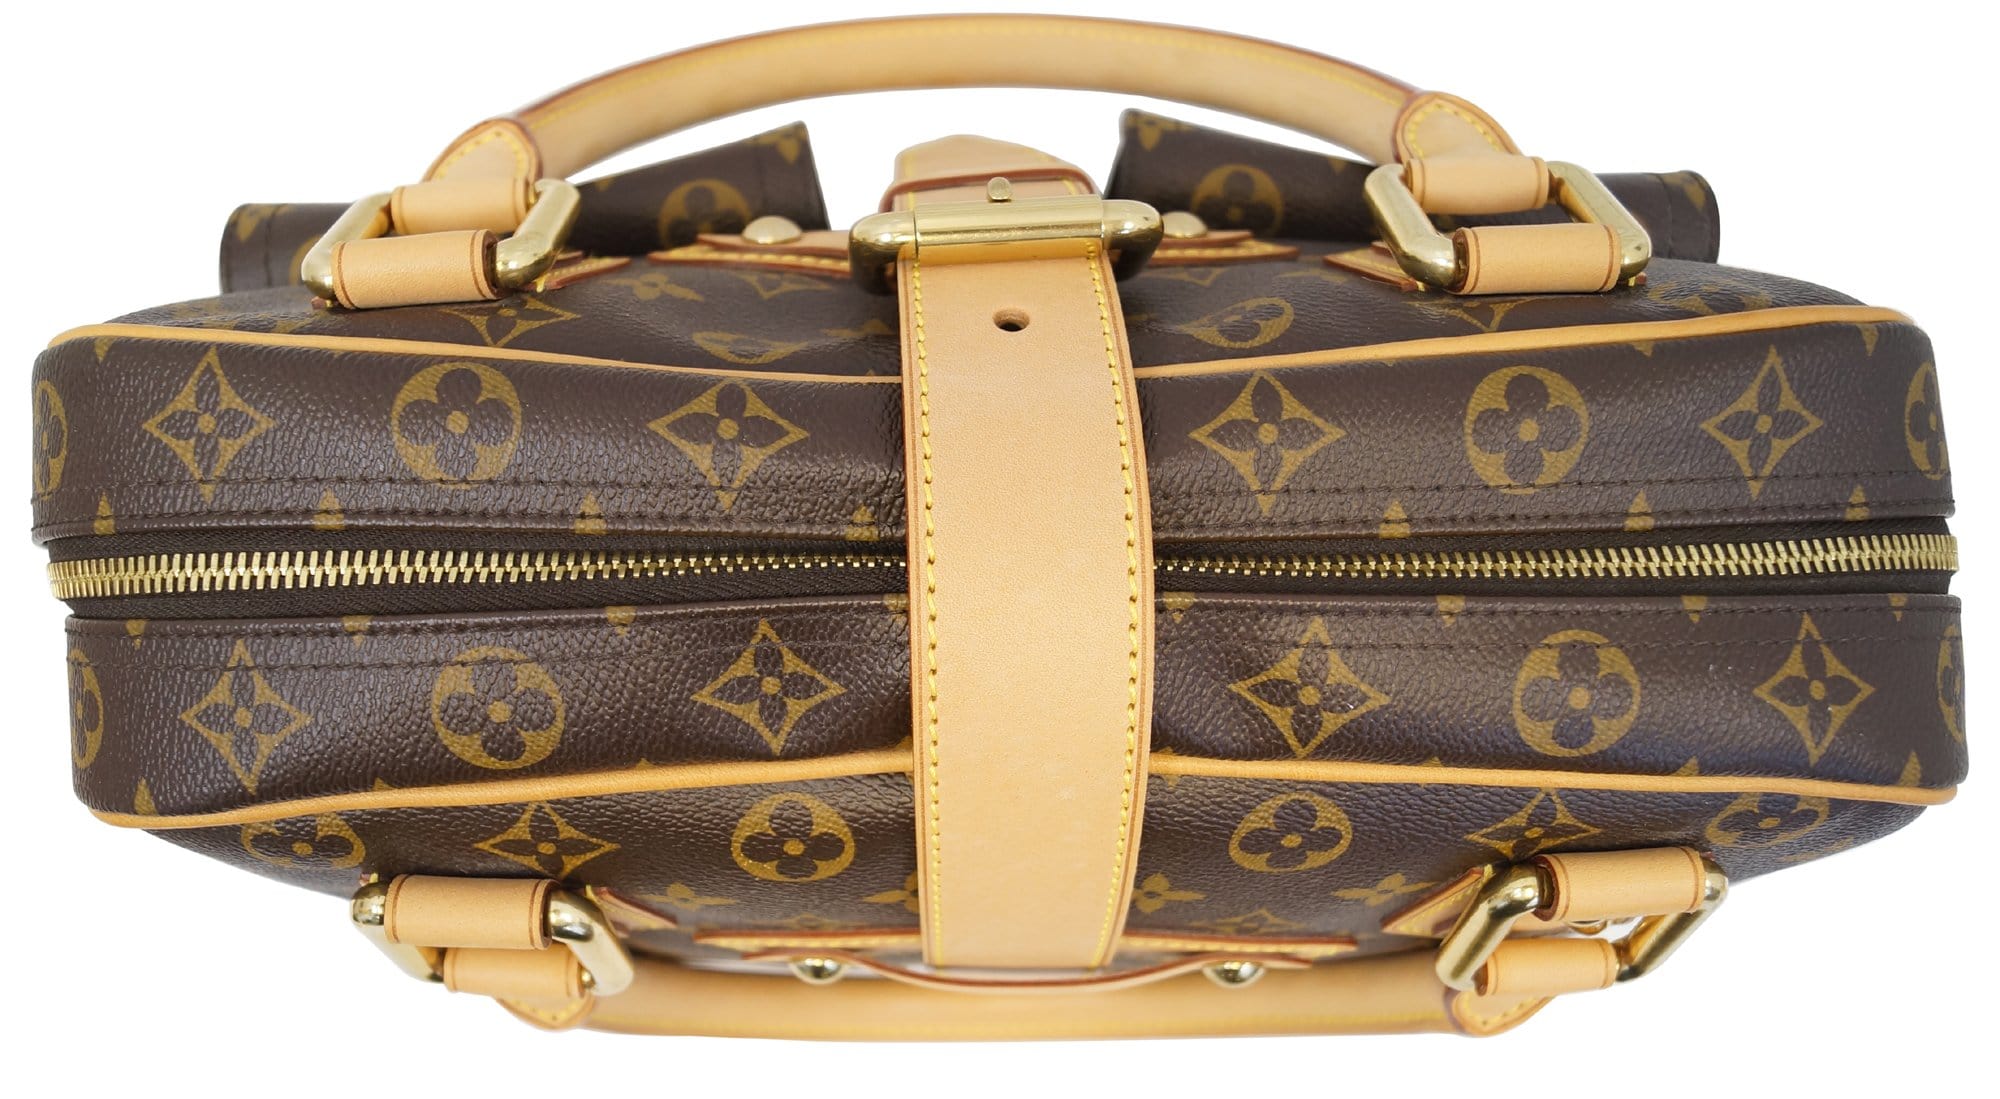 Manhattan leather handbag Louis Vuitton Brown in Leather - 32736120